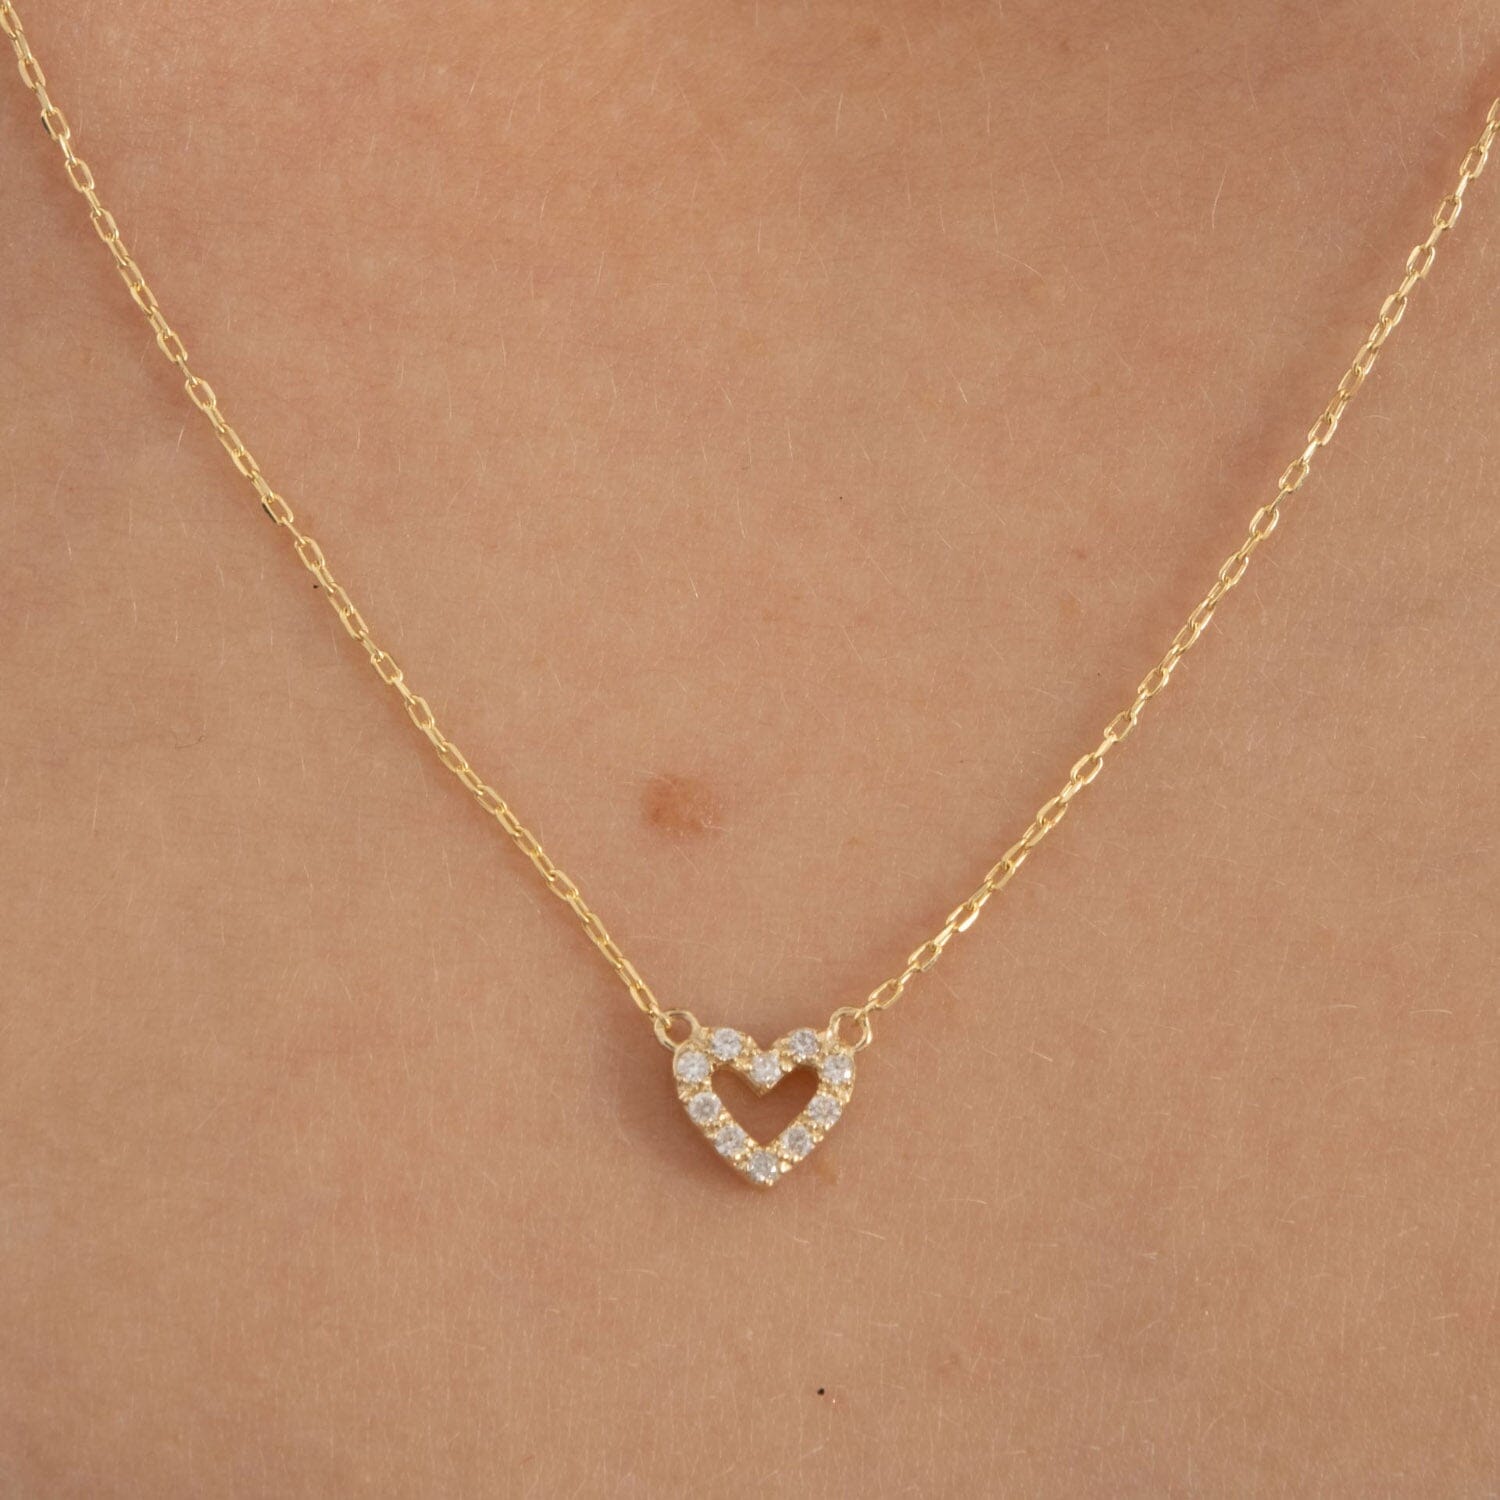 Small Diamond Heart Pendant